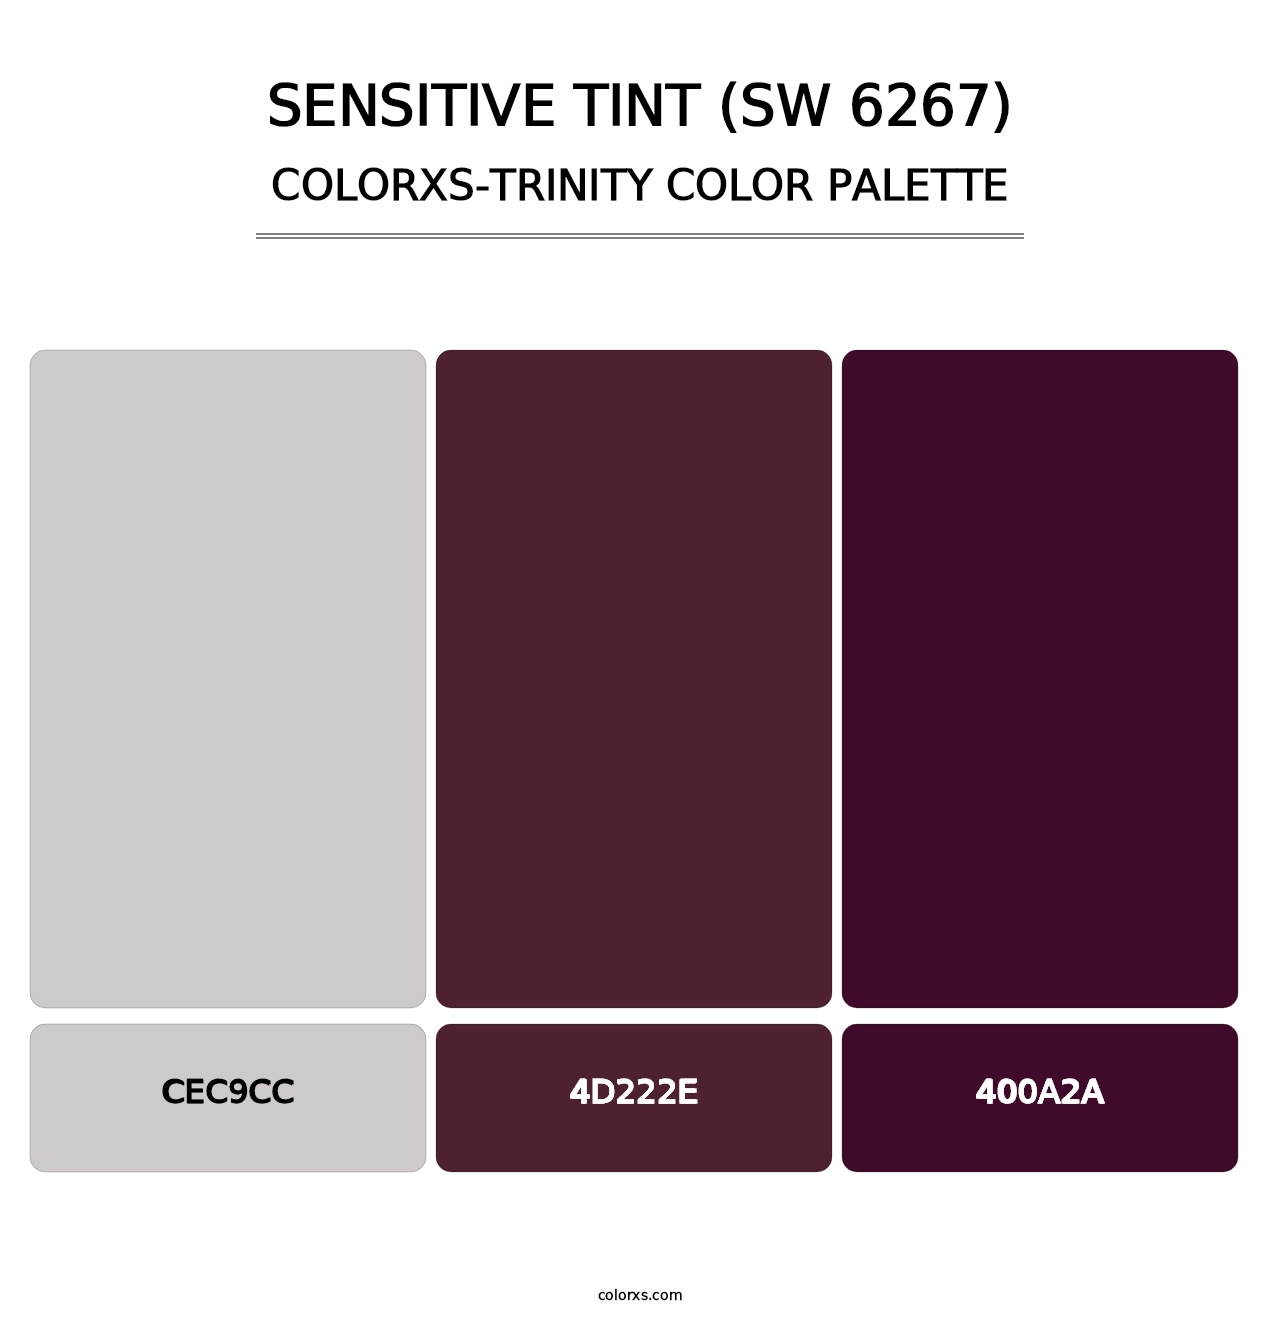 Sensitive Tint (SW 6267) - Colorxs Trinity Palette